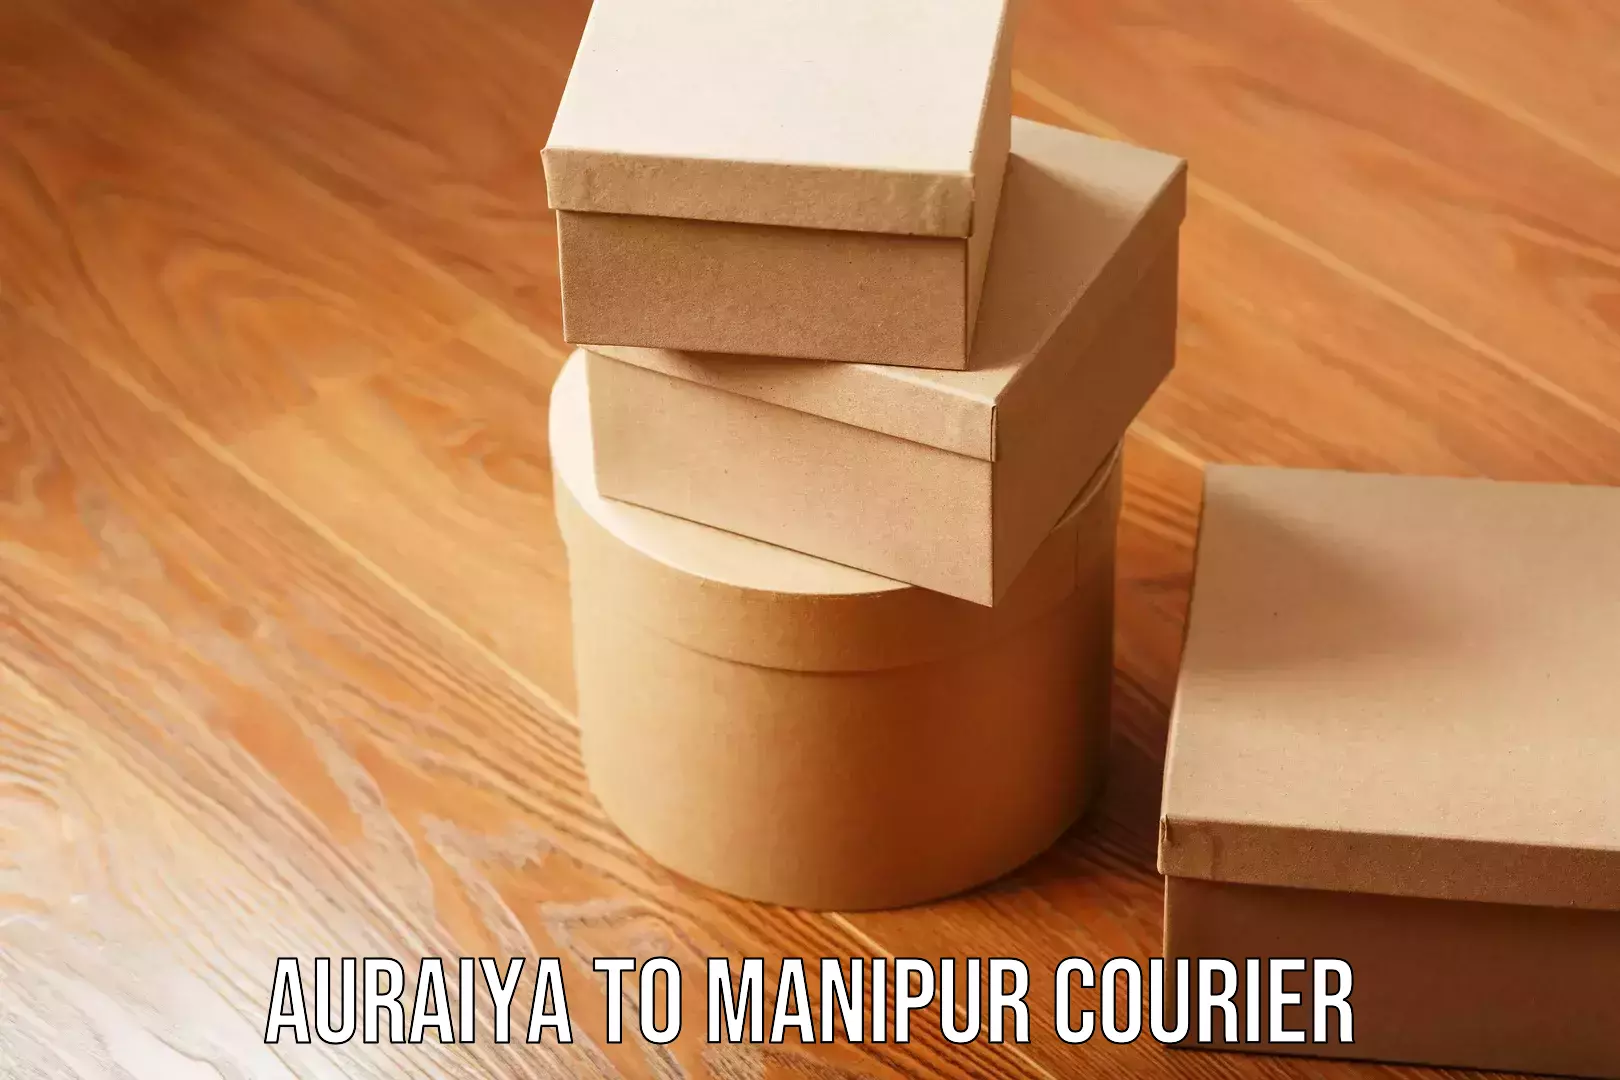 Nationwide delivery network Auraiya to Manipur